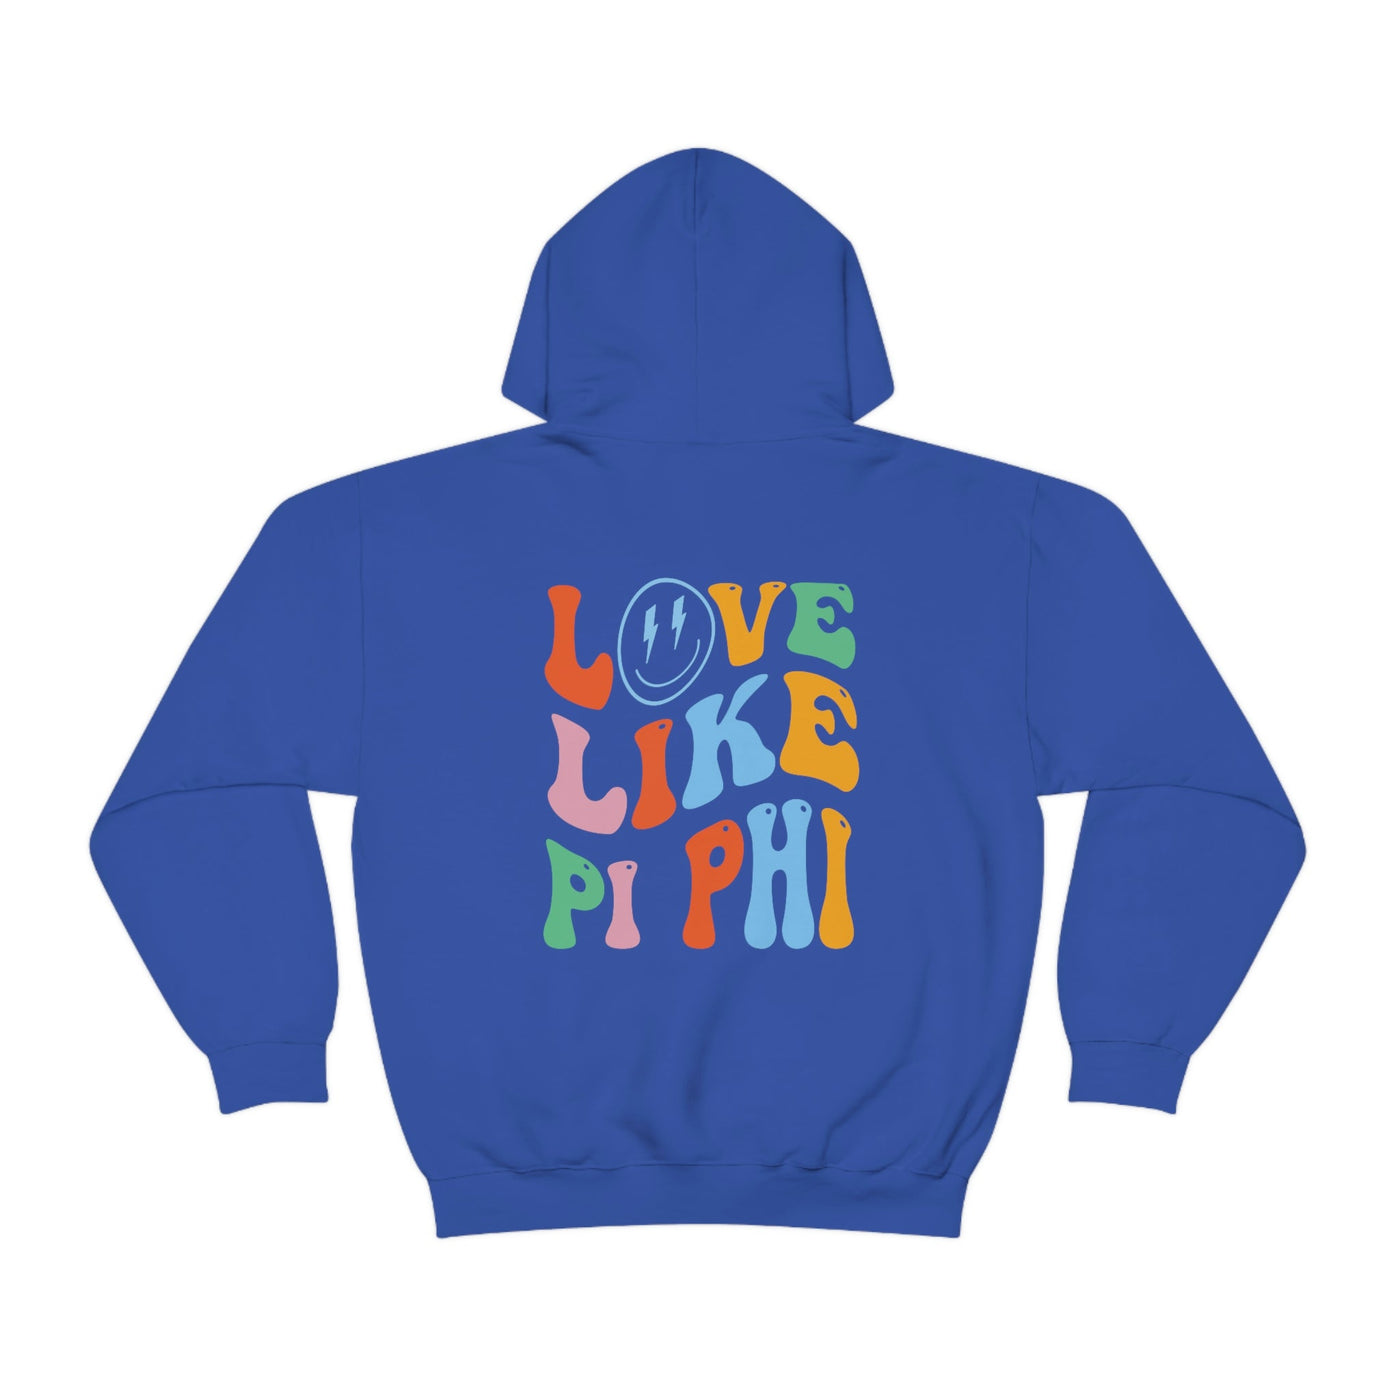 Pi Beta Phi Soft Sorority Sweatshirt | Love Like Pi Phi Sorority Hoodie